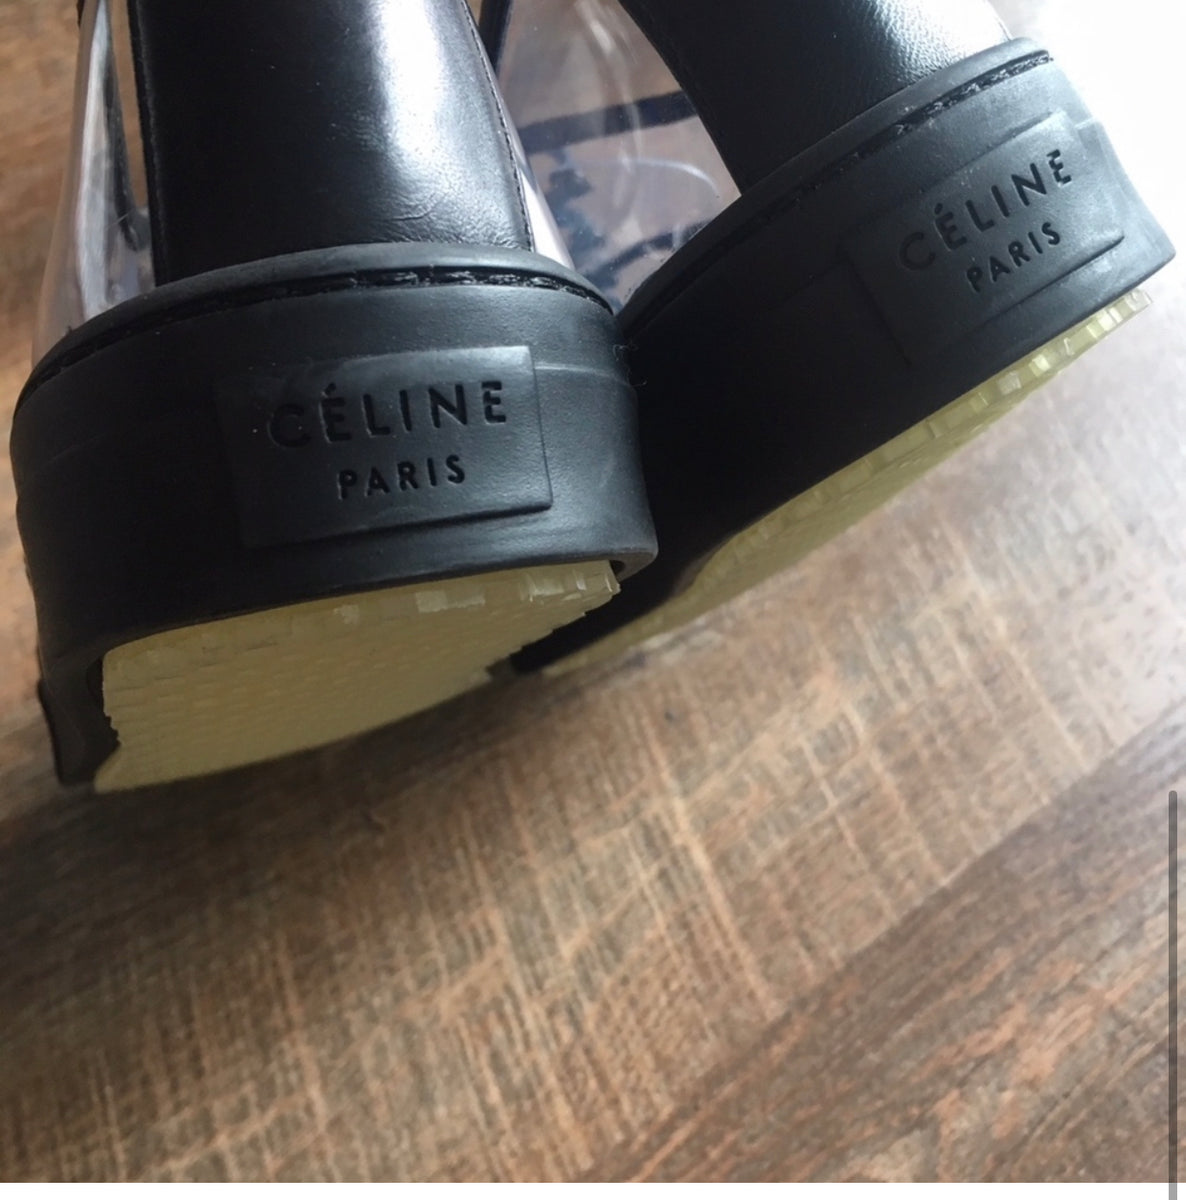 Celine, Shoes, Celine Phoebe Philo Hightop Tan Sneakers